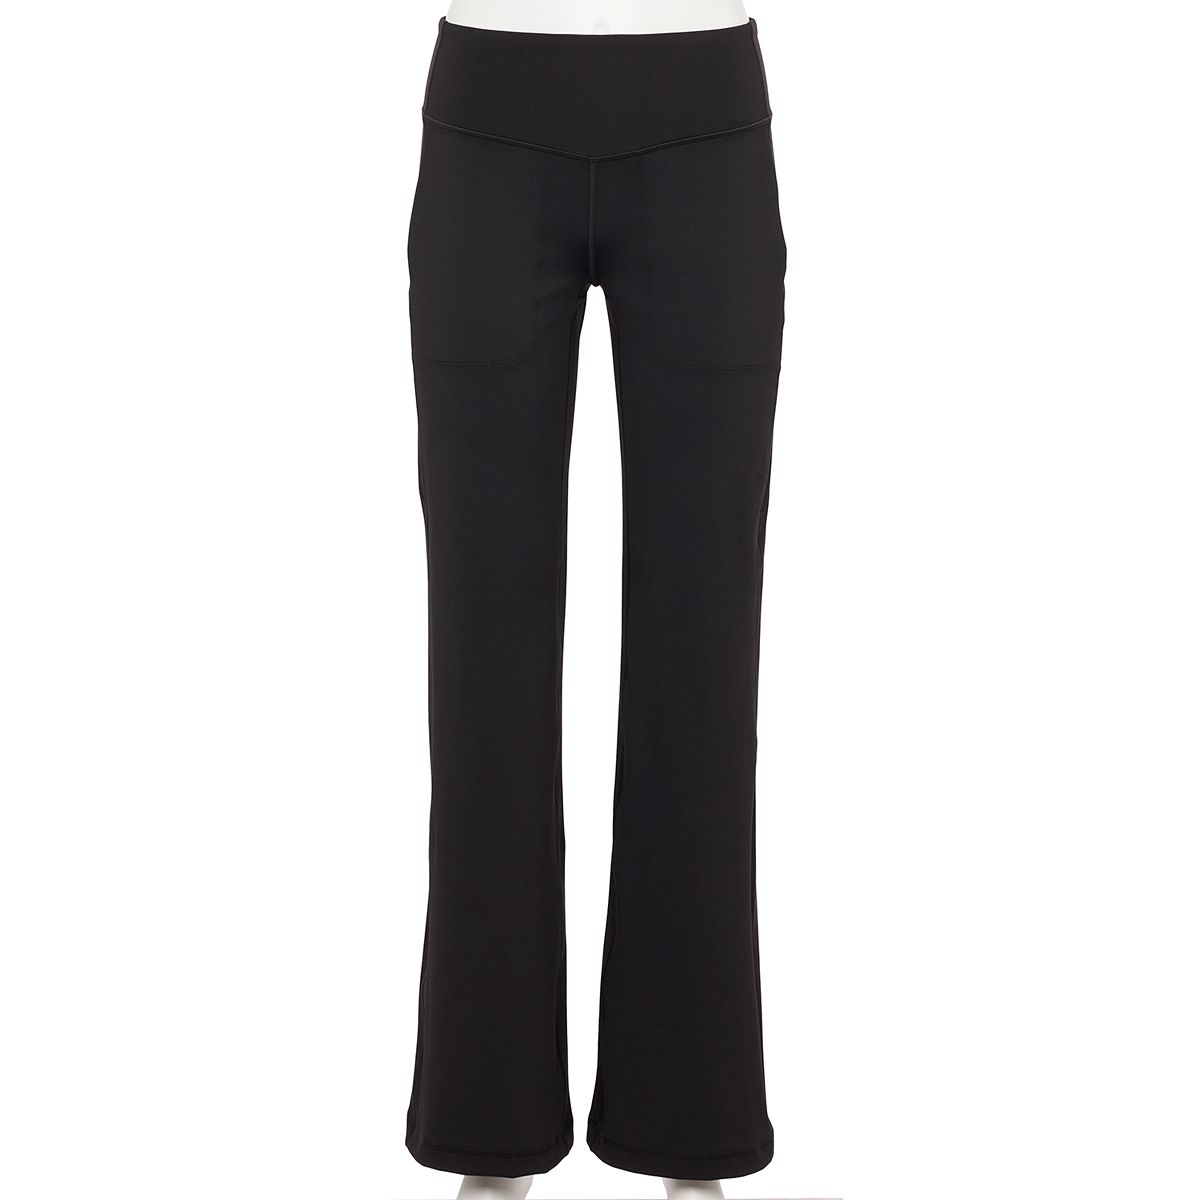 Petite Flare Yoga Pants for Women Bottom Palazzo Women's Bell Flare Wide  Yoga Yoga Pants Yoga Pants Plus Size 2X